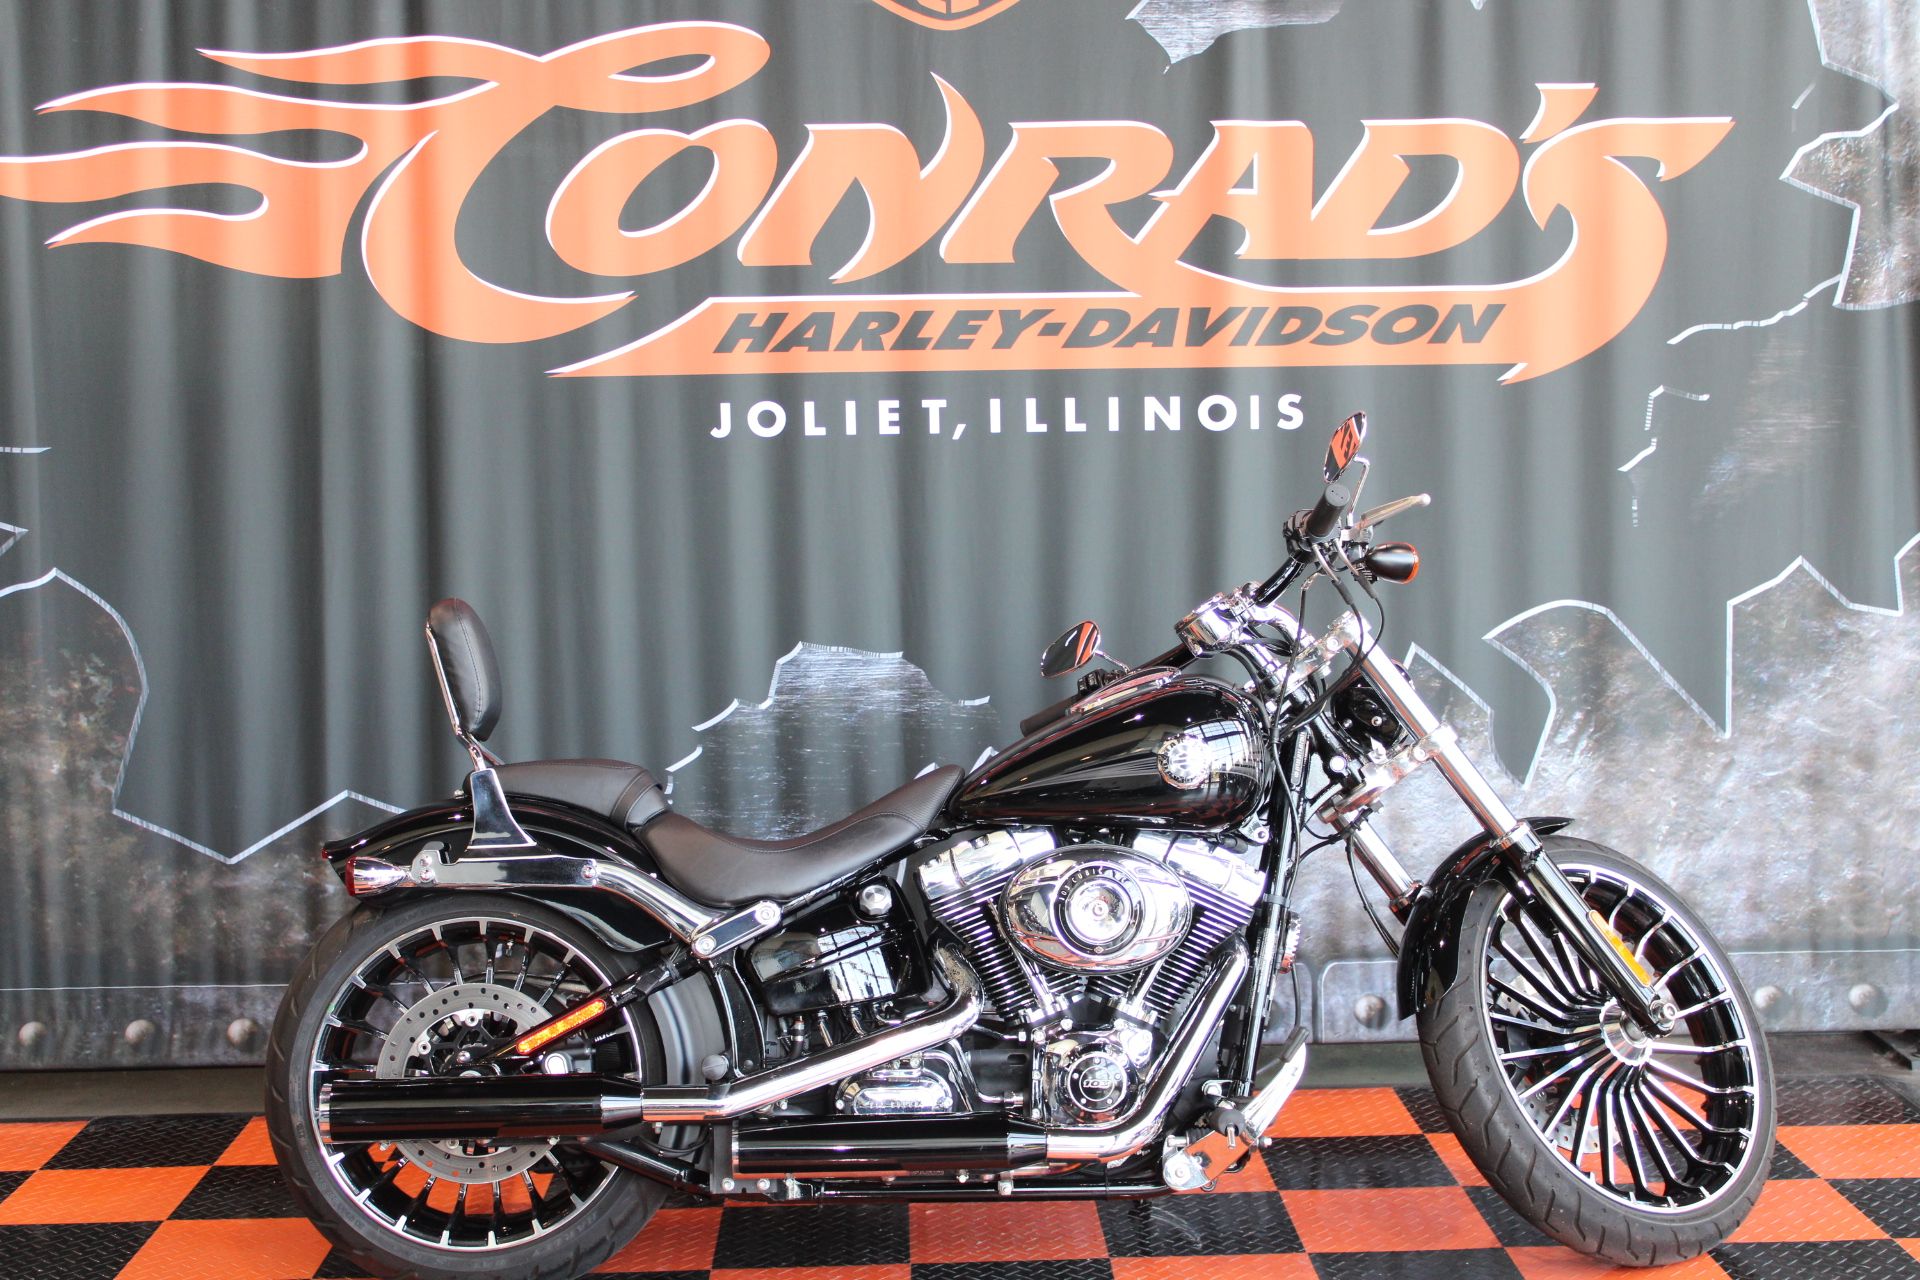 2015 Harley-Davidson Breakout® in Shorewood, Illinois - Photo 1